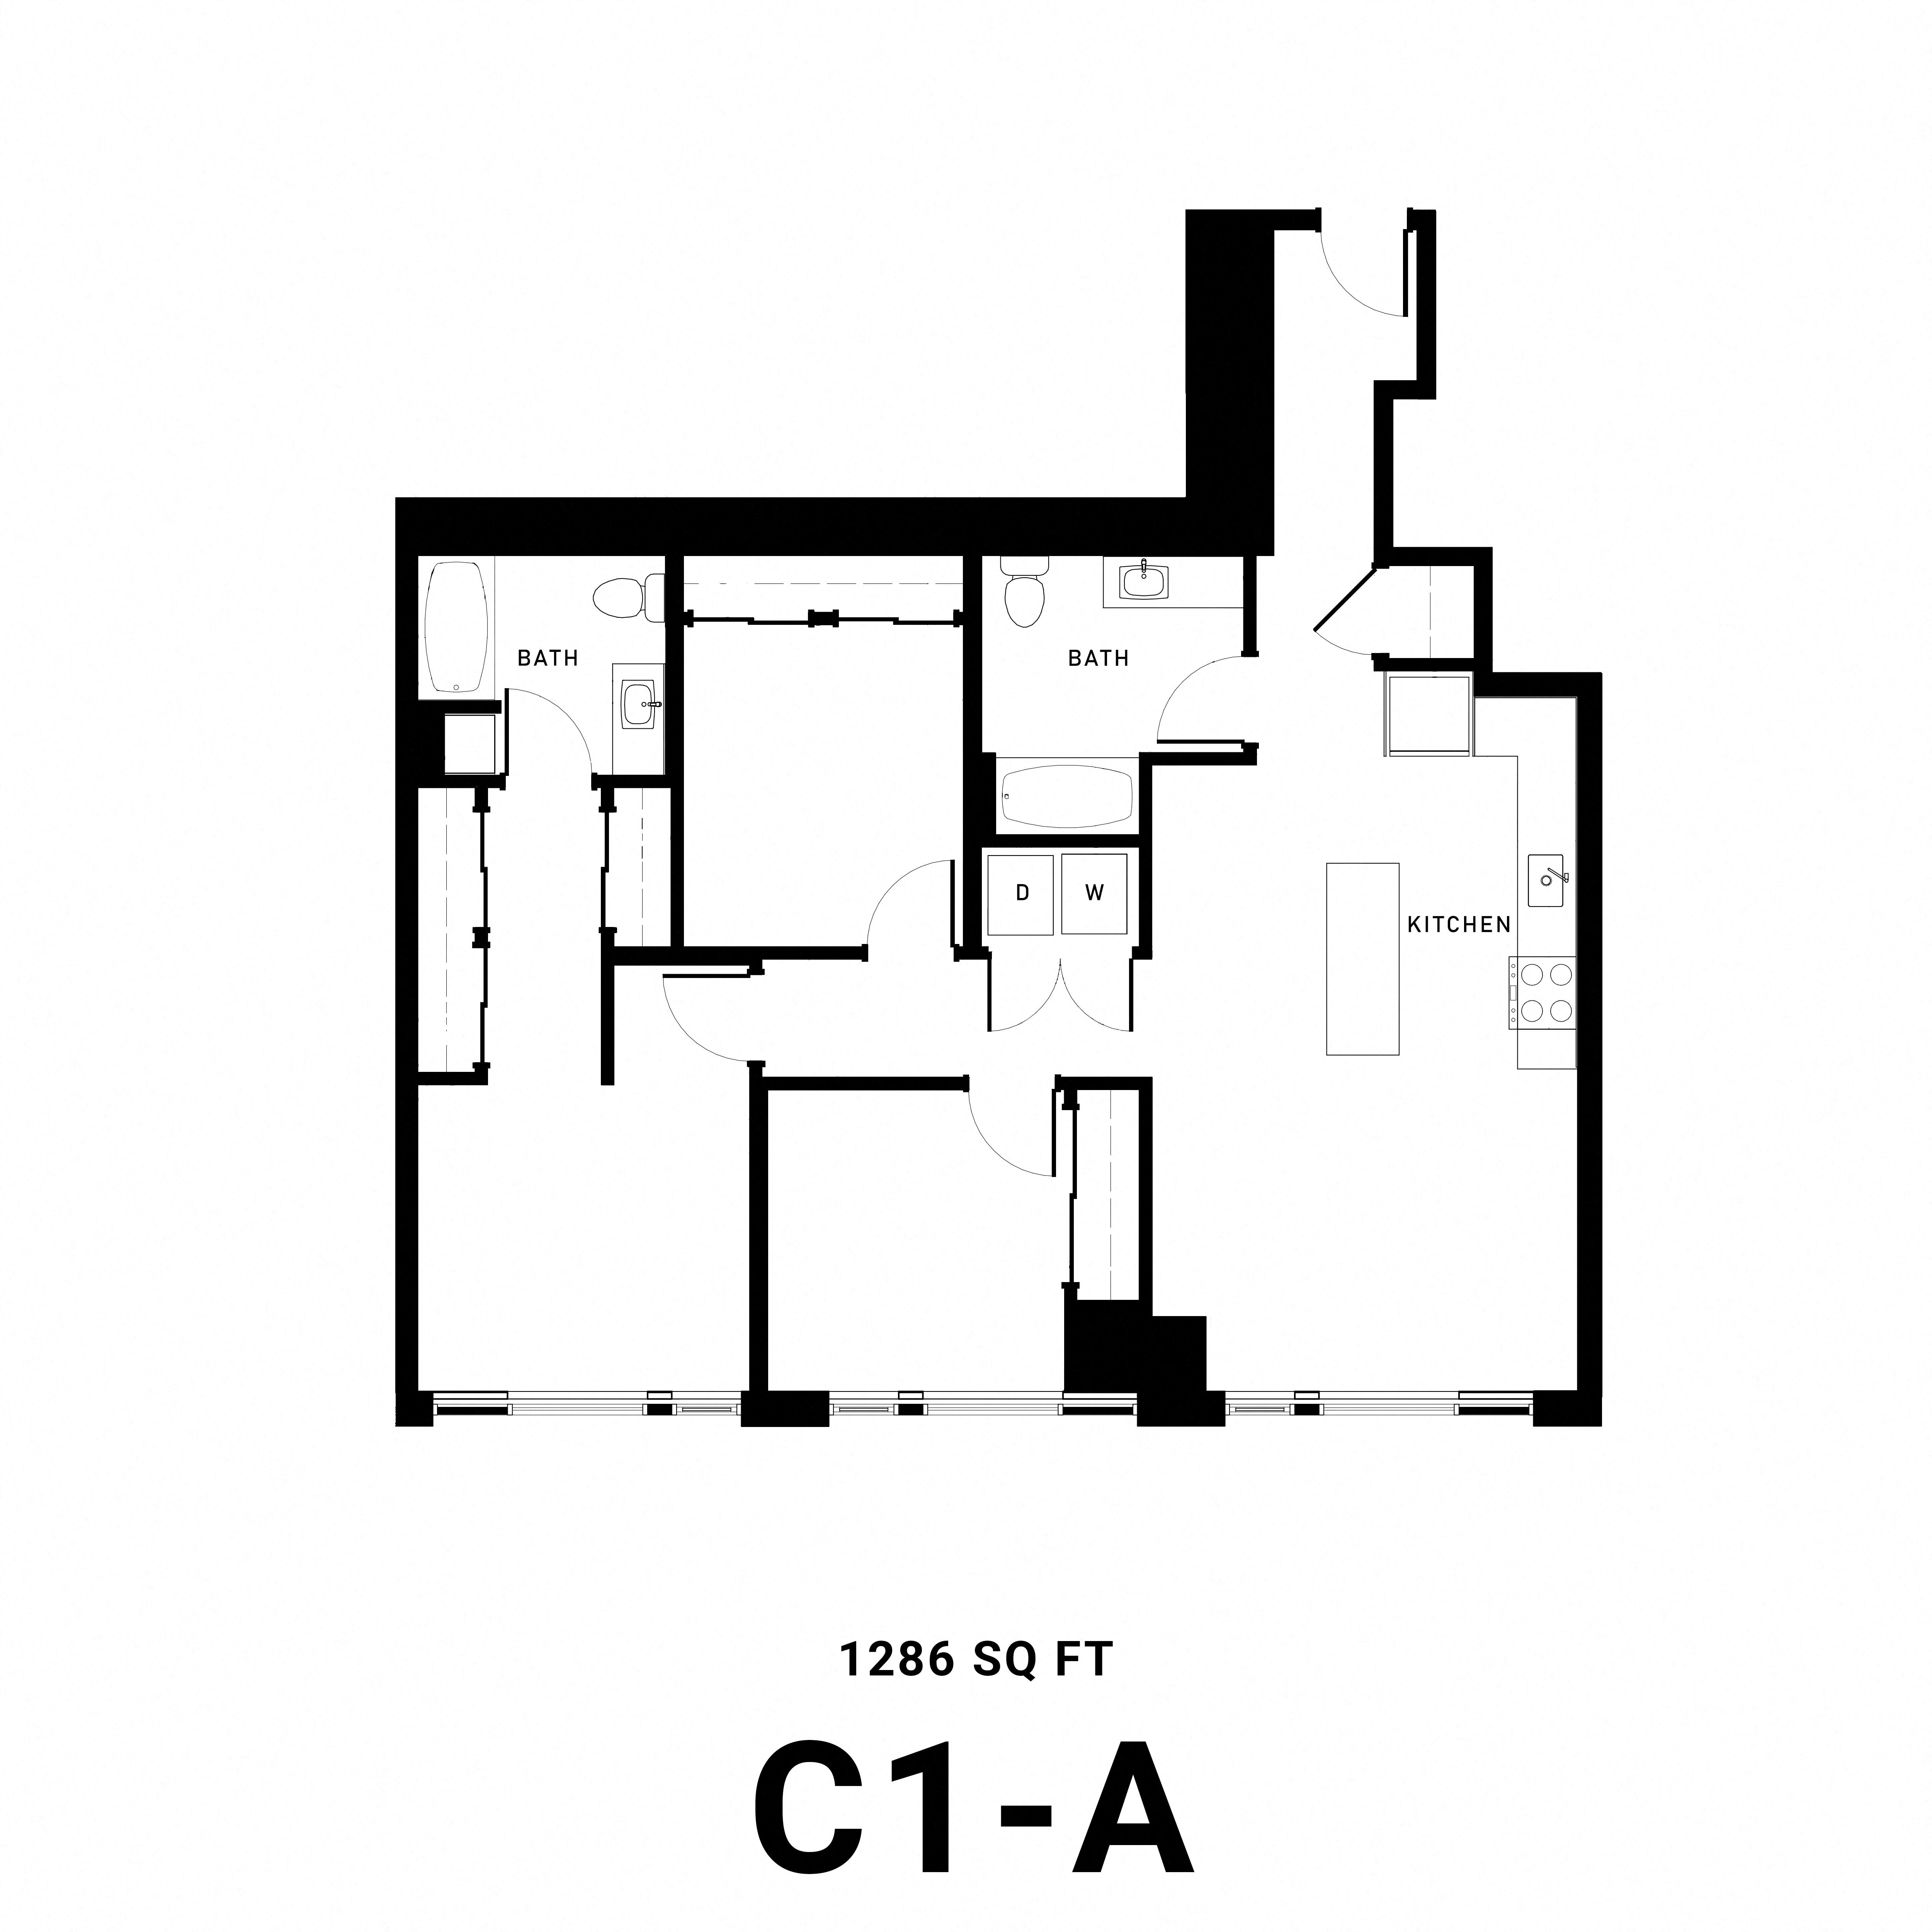 Floorplan C1A